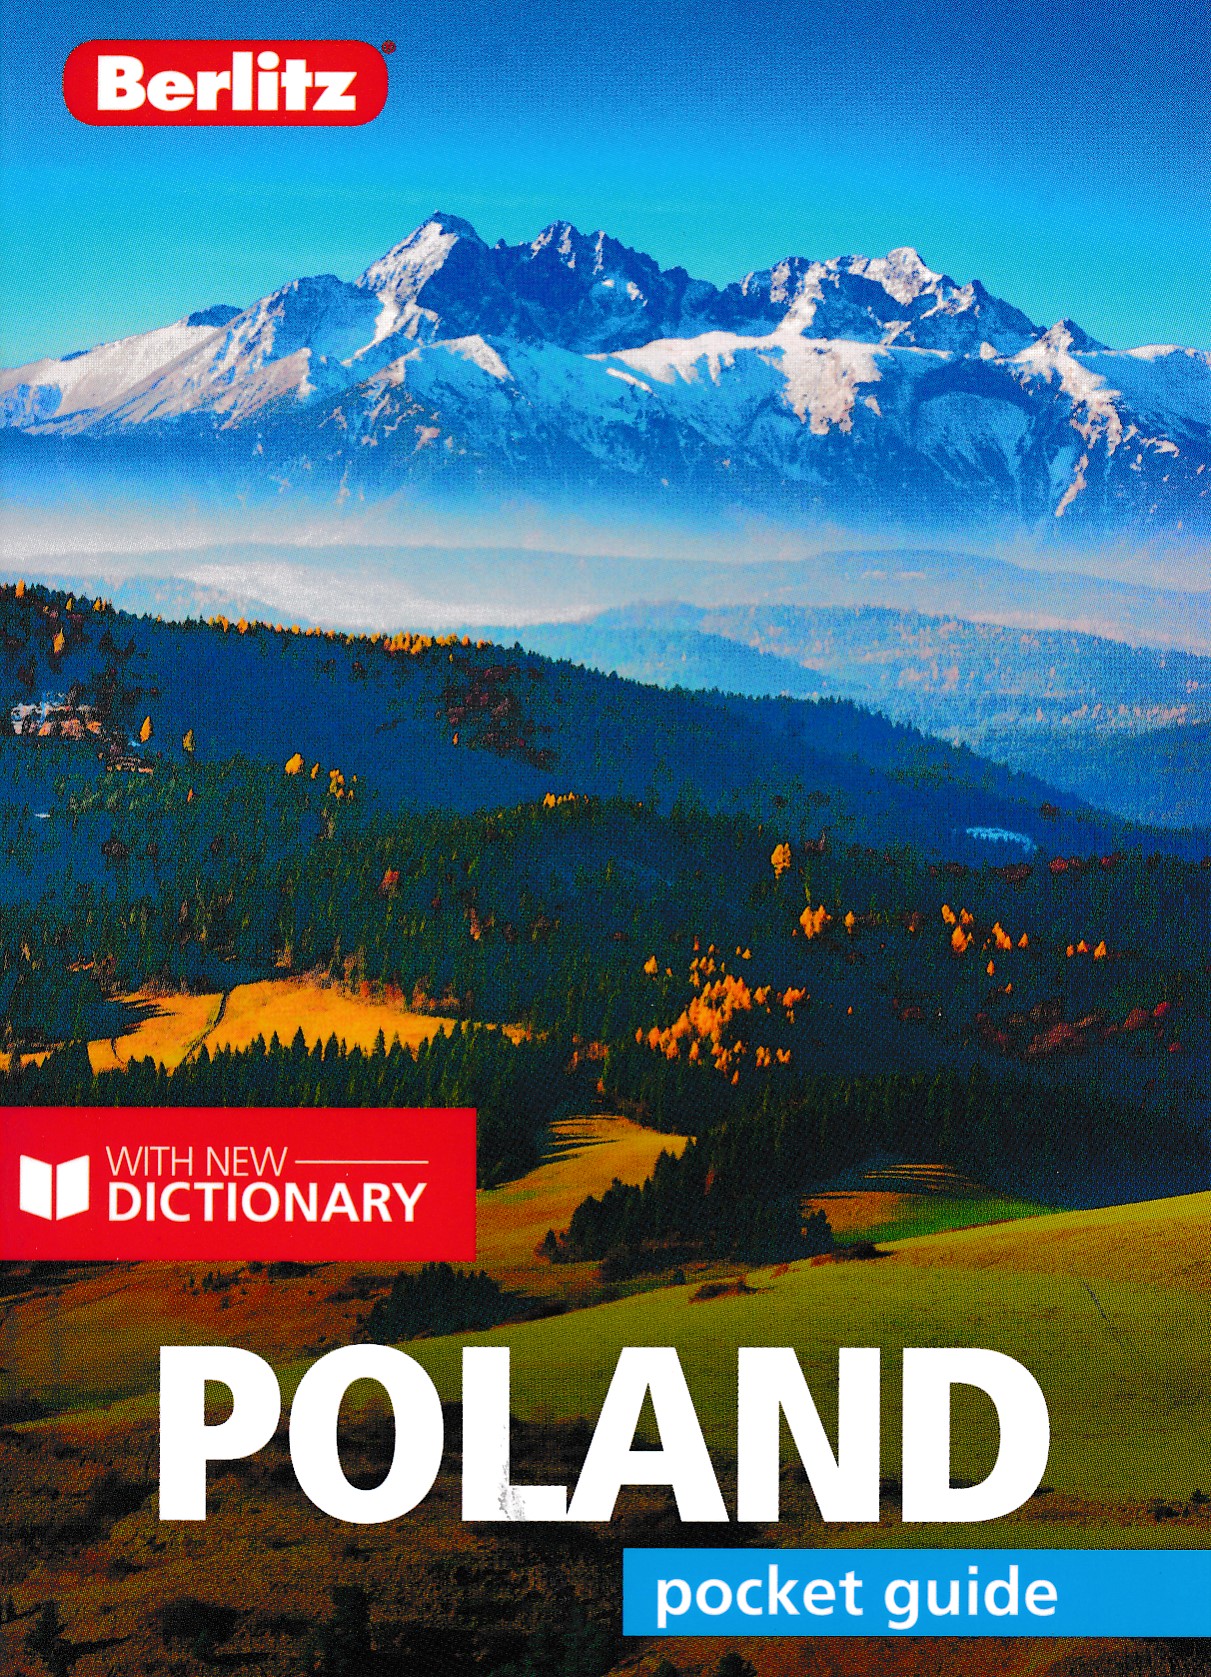 Online bestellen: Reisgids Pocket Guide Poland - Polen | Berlitz